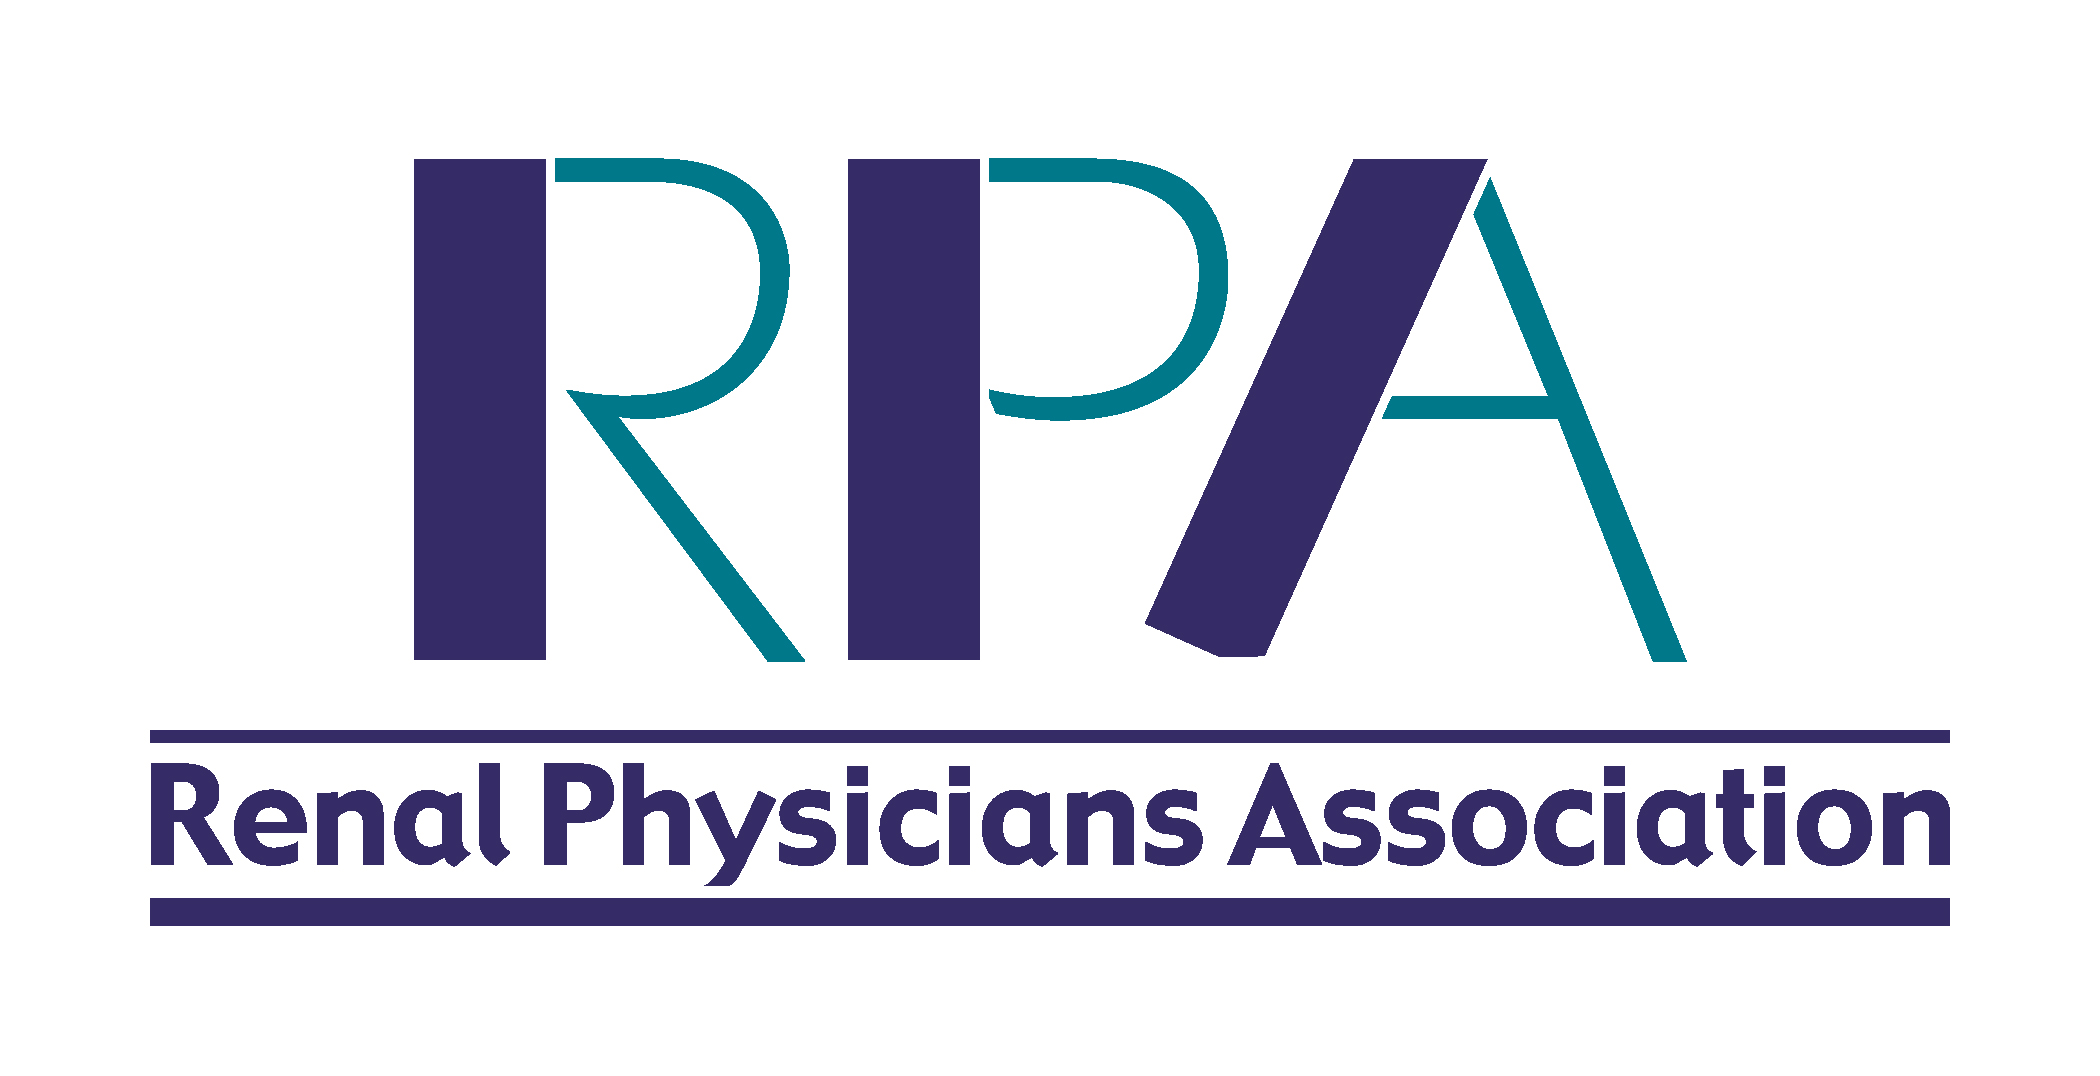 RPA 2022 VIRTUAL - The Renal Physicians Association's Annual Meeting / Virtual